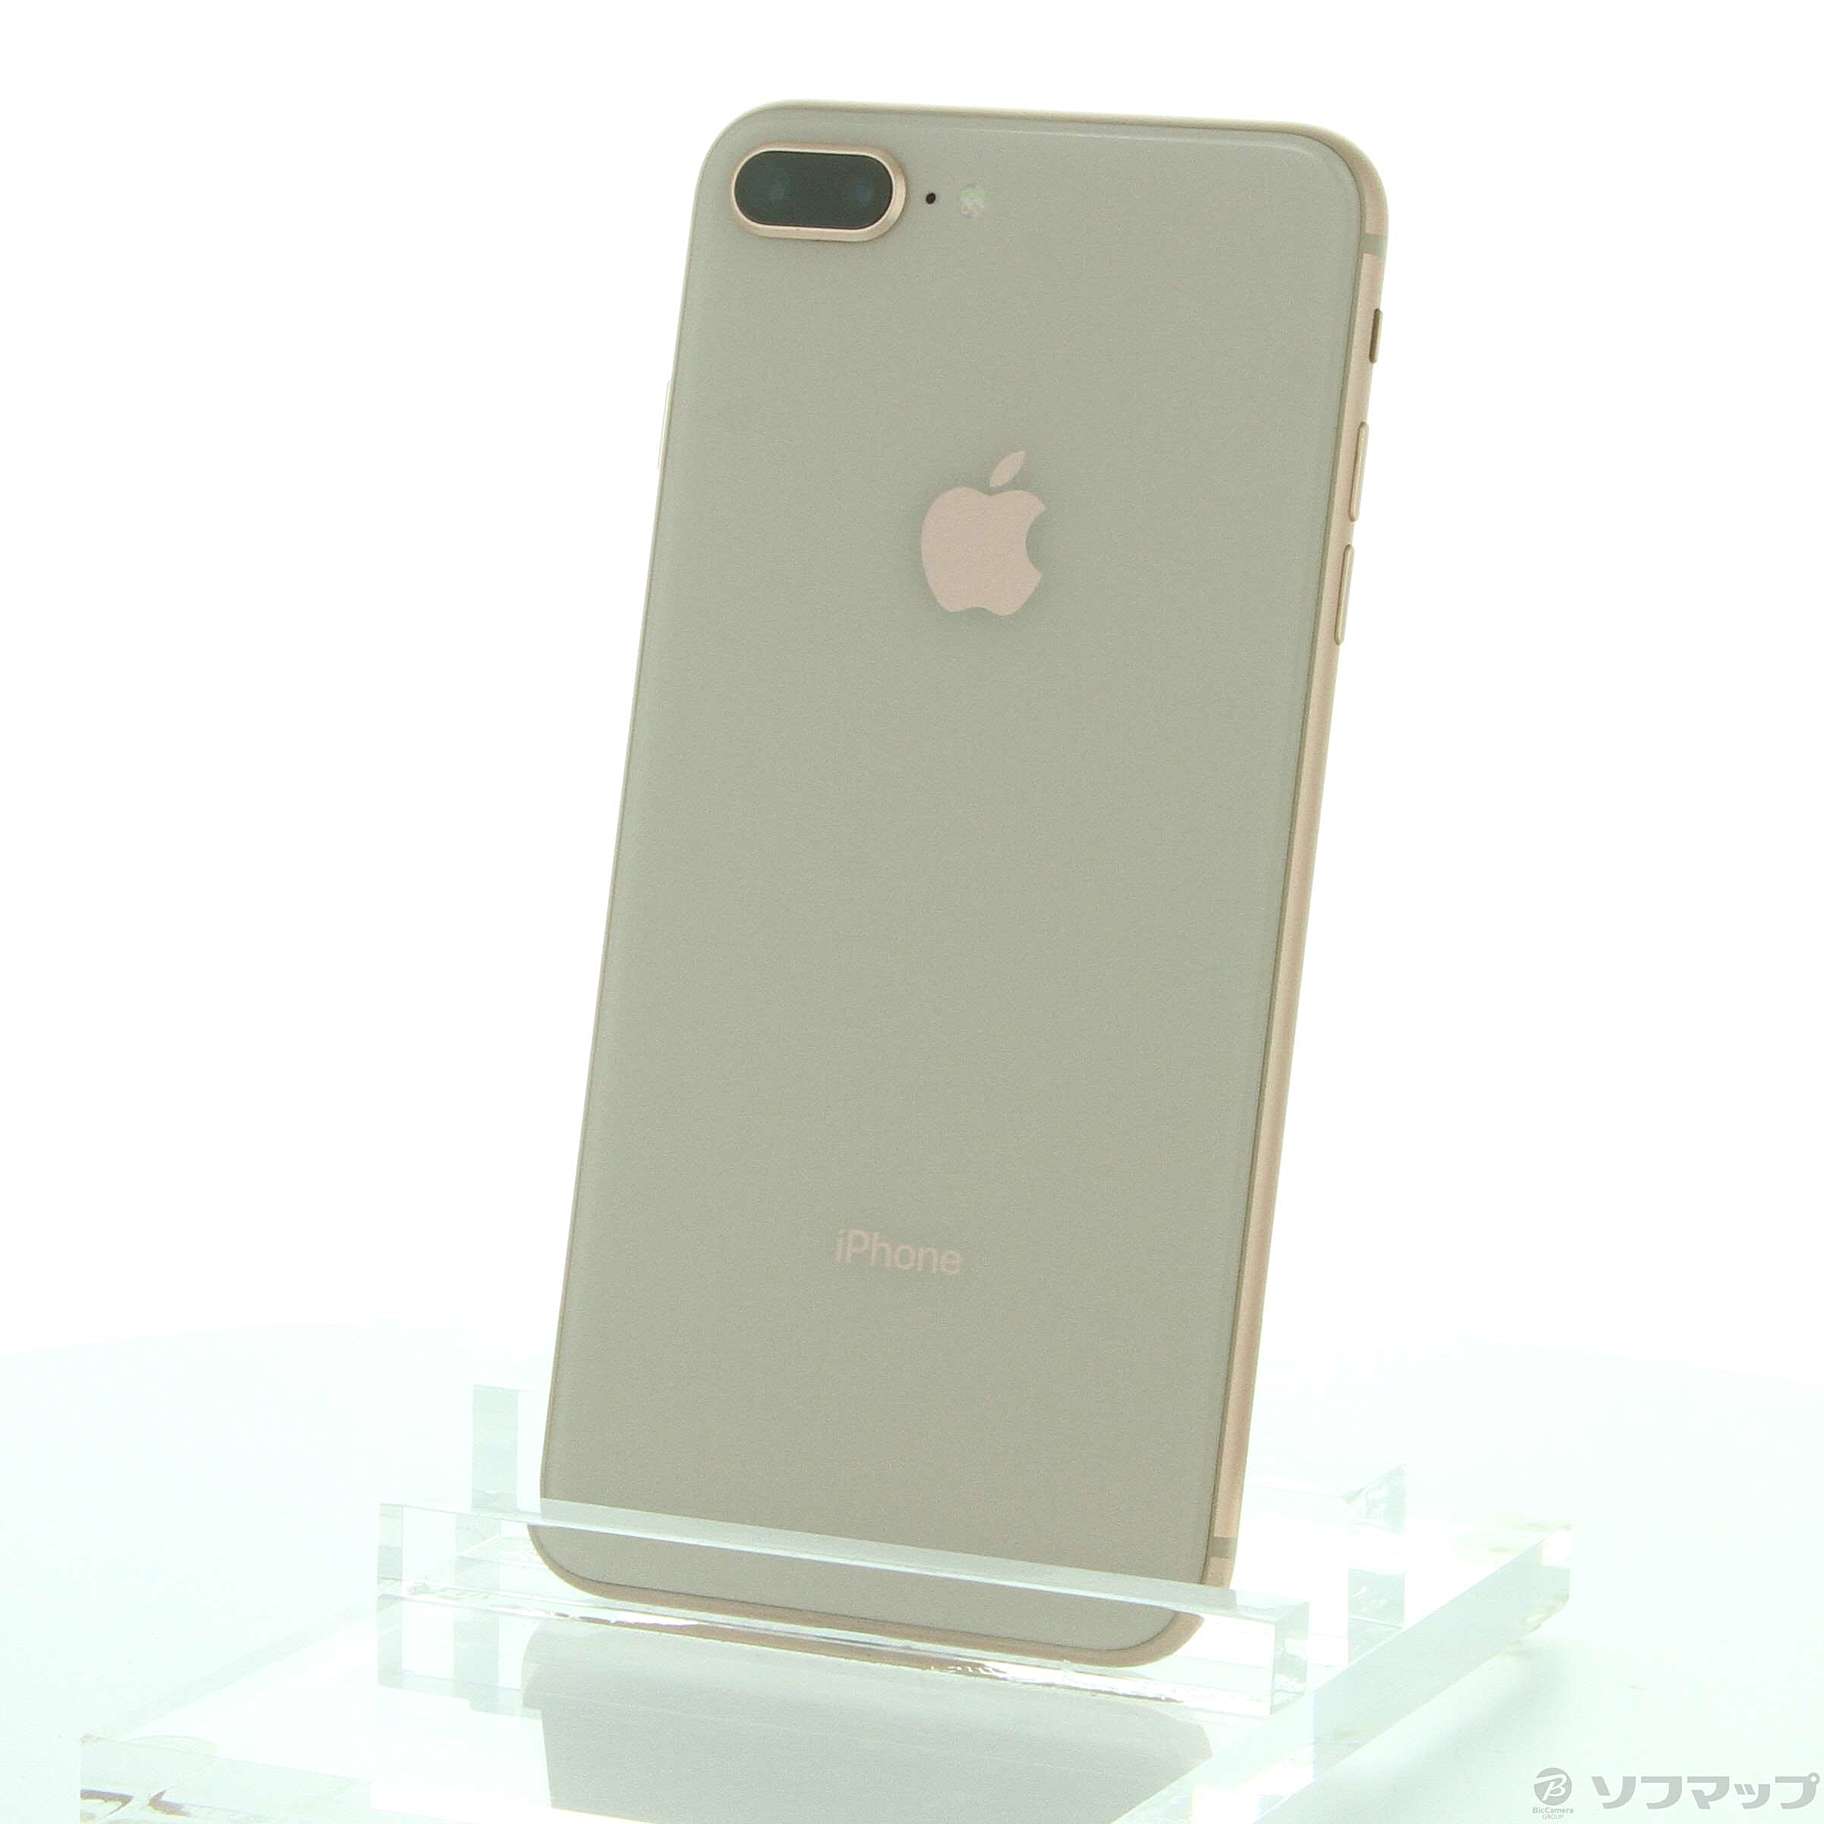 機種名iPhone8PlusiPhone 8 Plus Gold 256 GB Softbank Apple